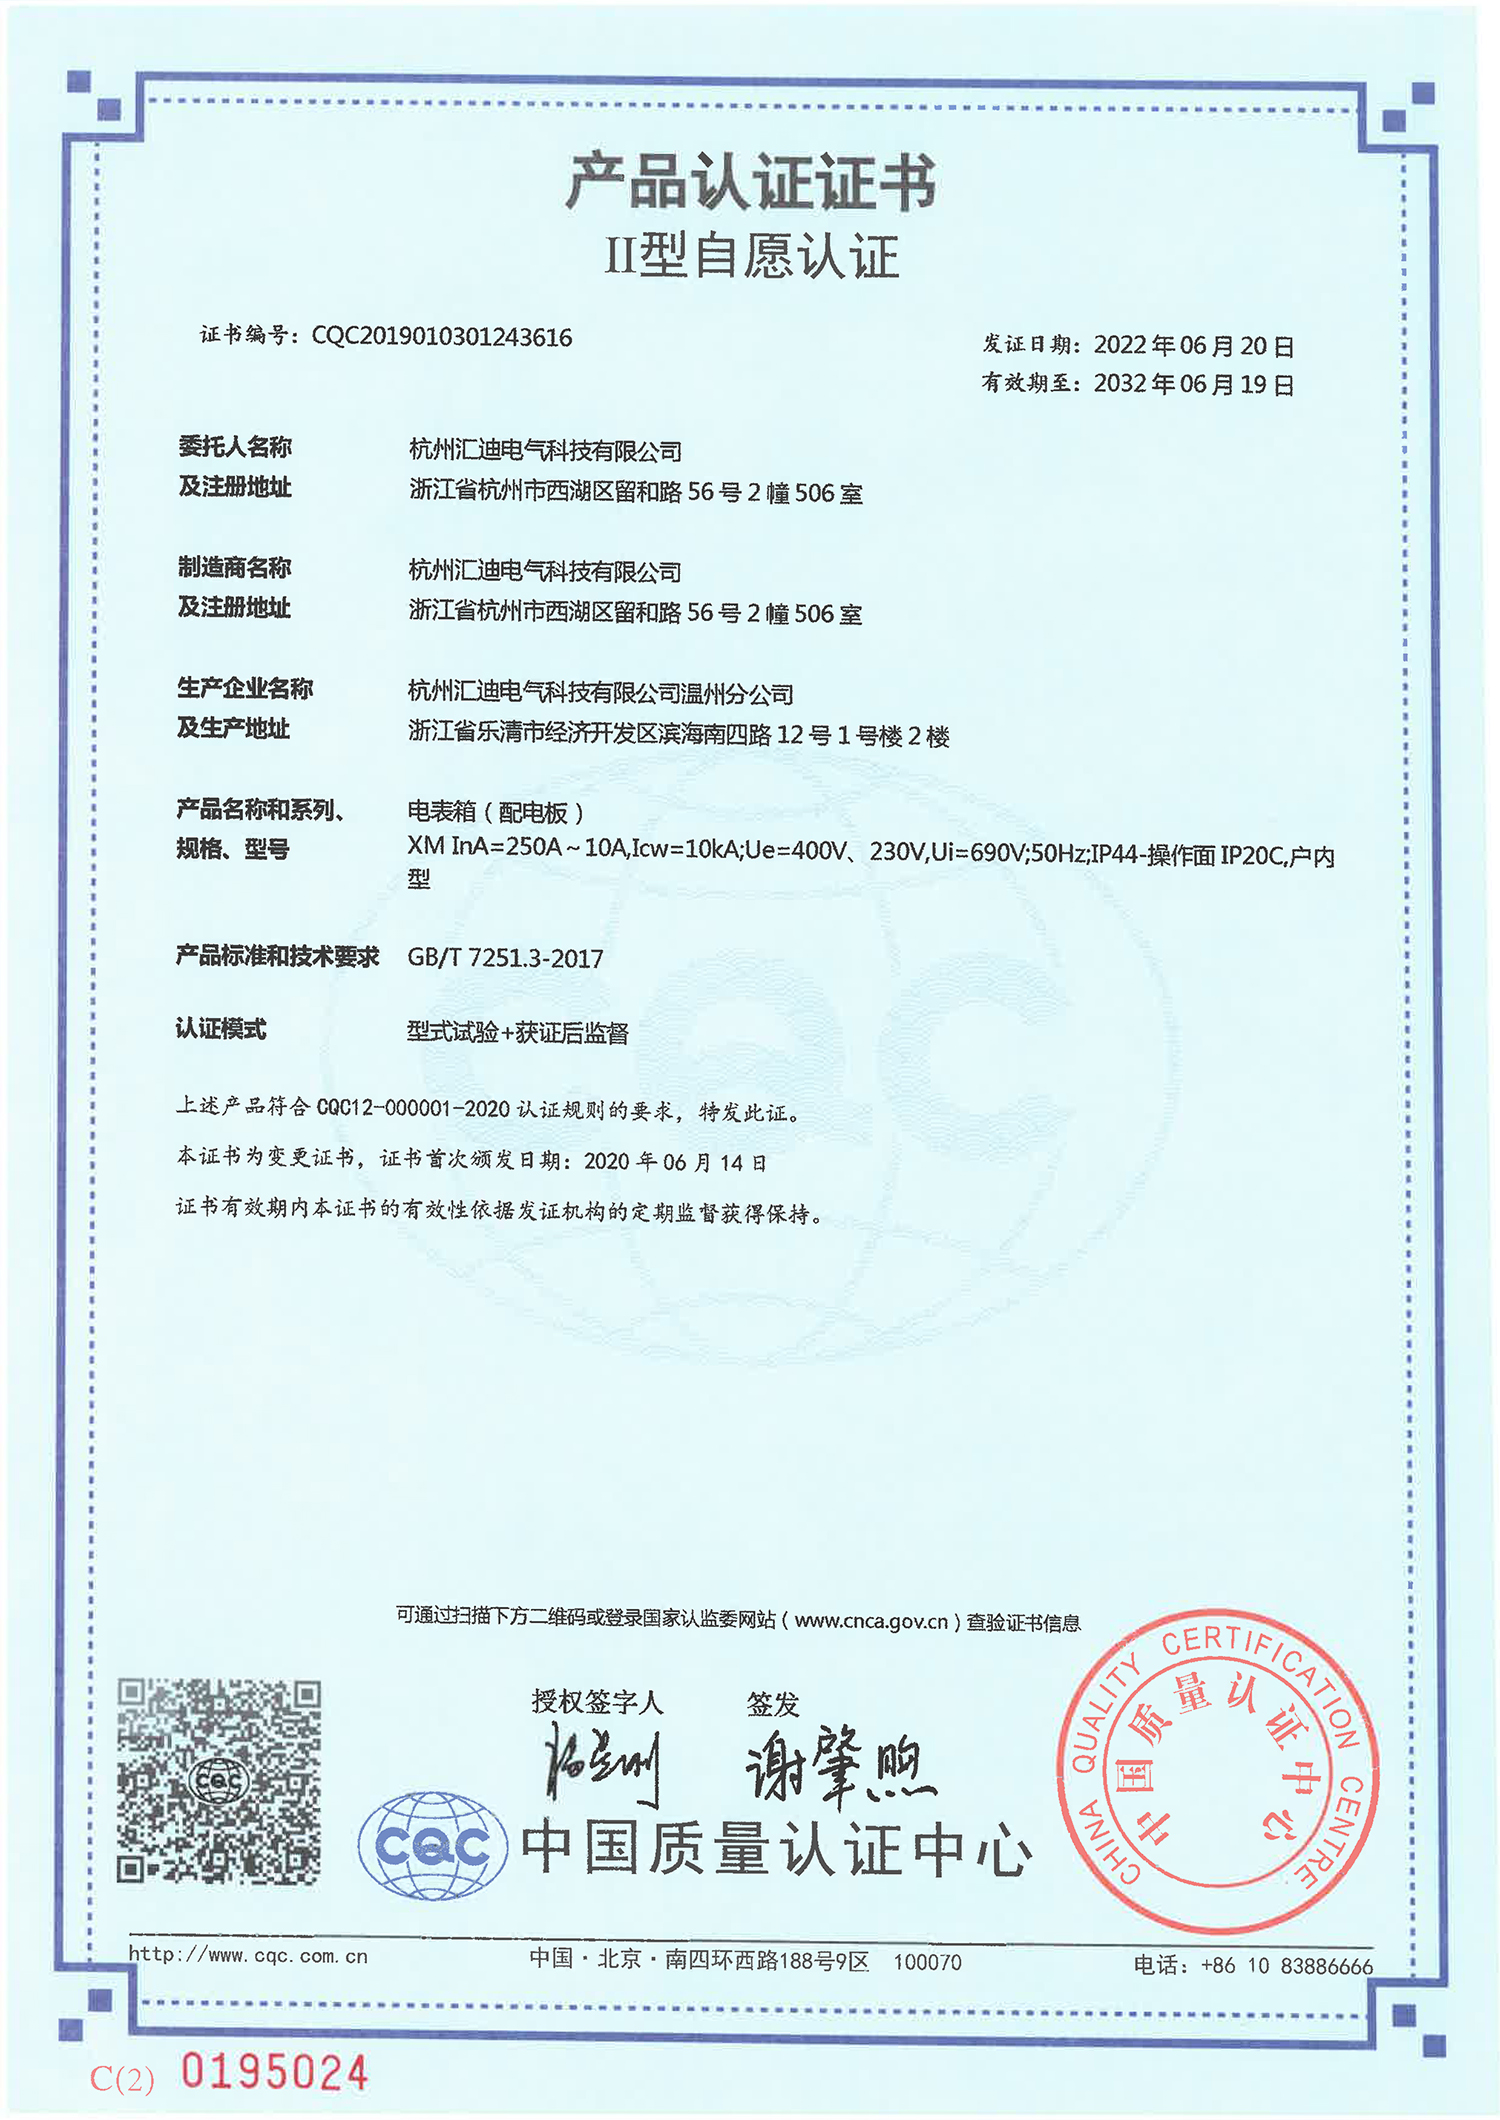 huud certificate 9